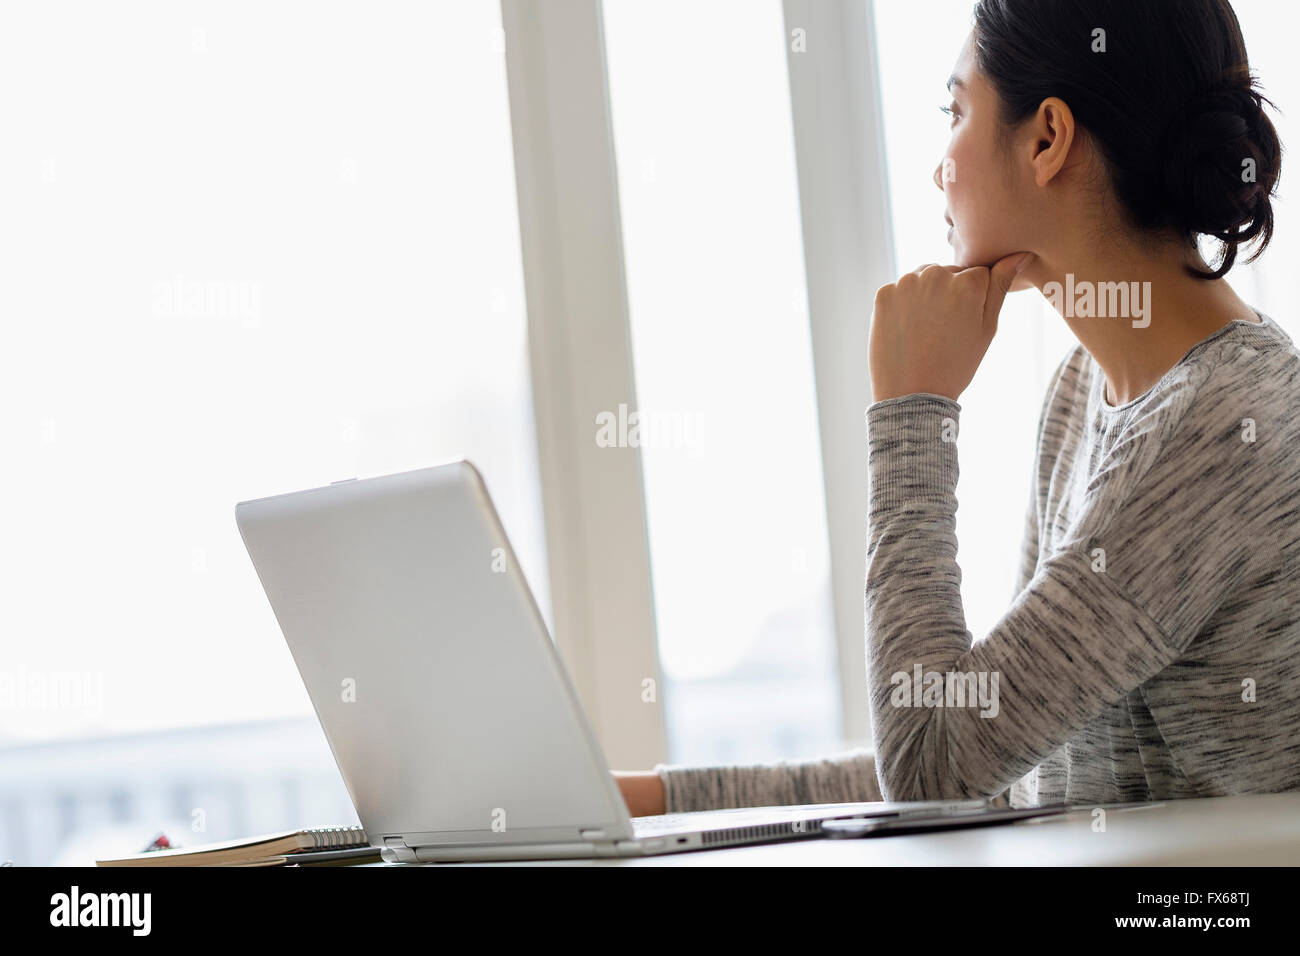 Hispanic woman sitting at laptop Stock Photo